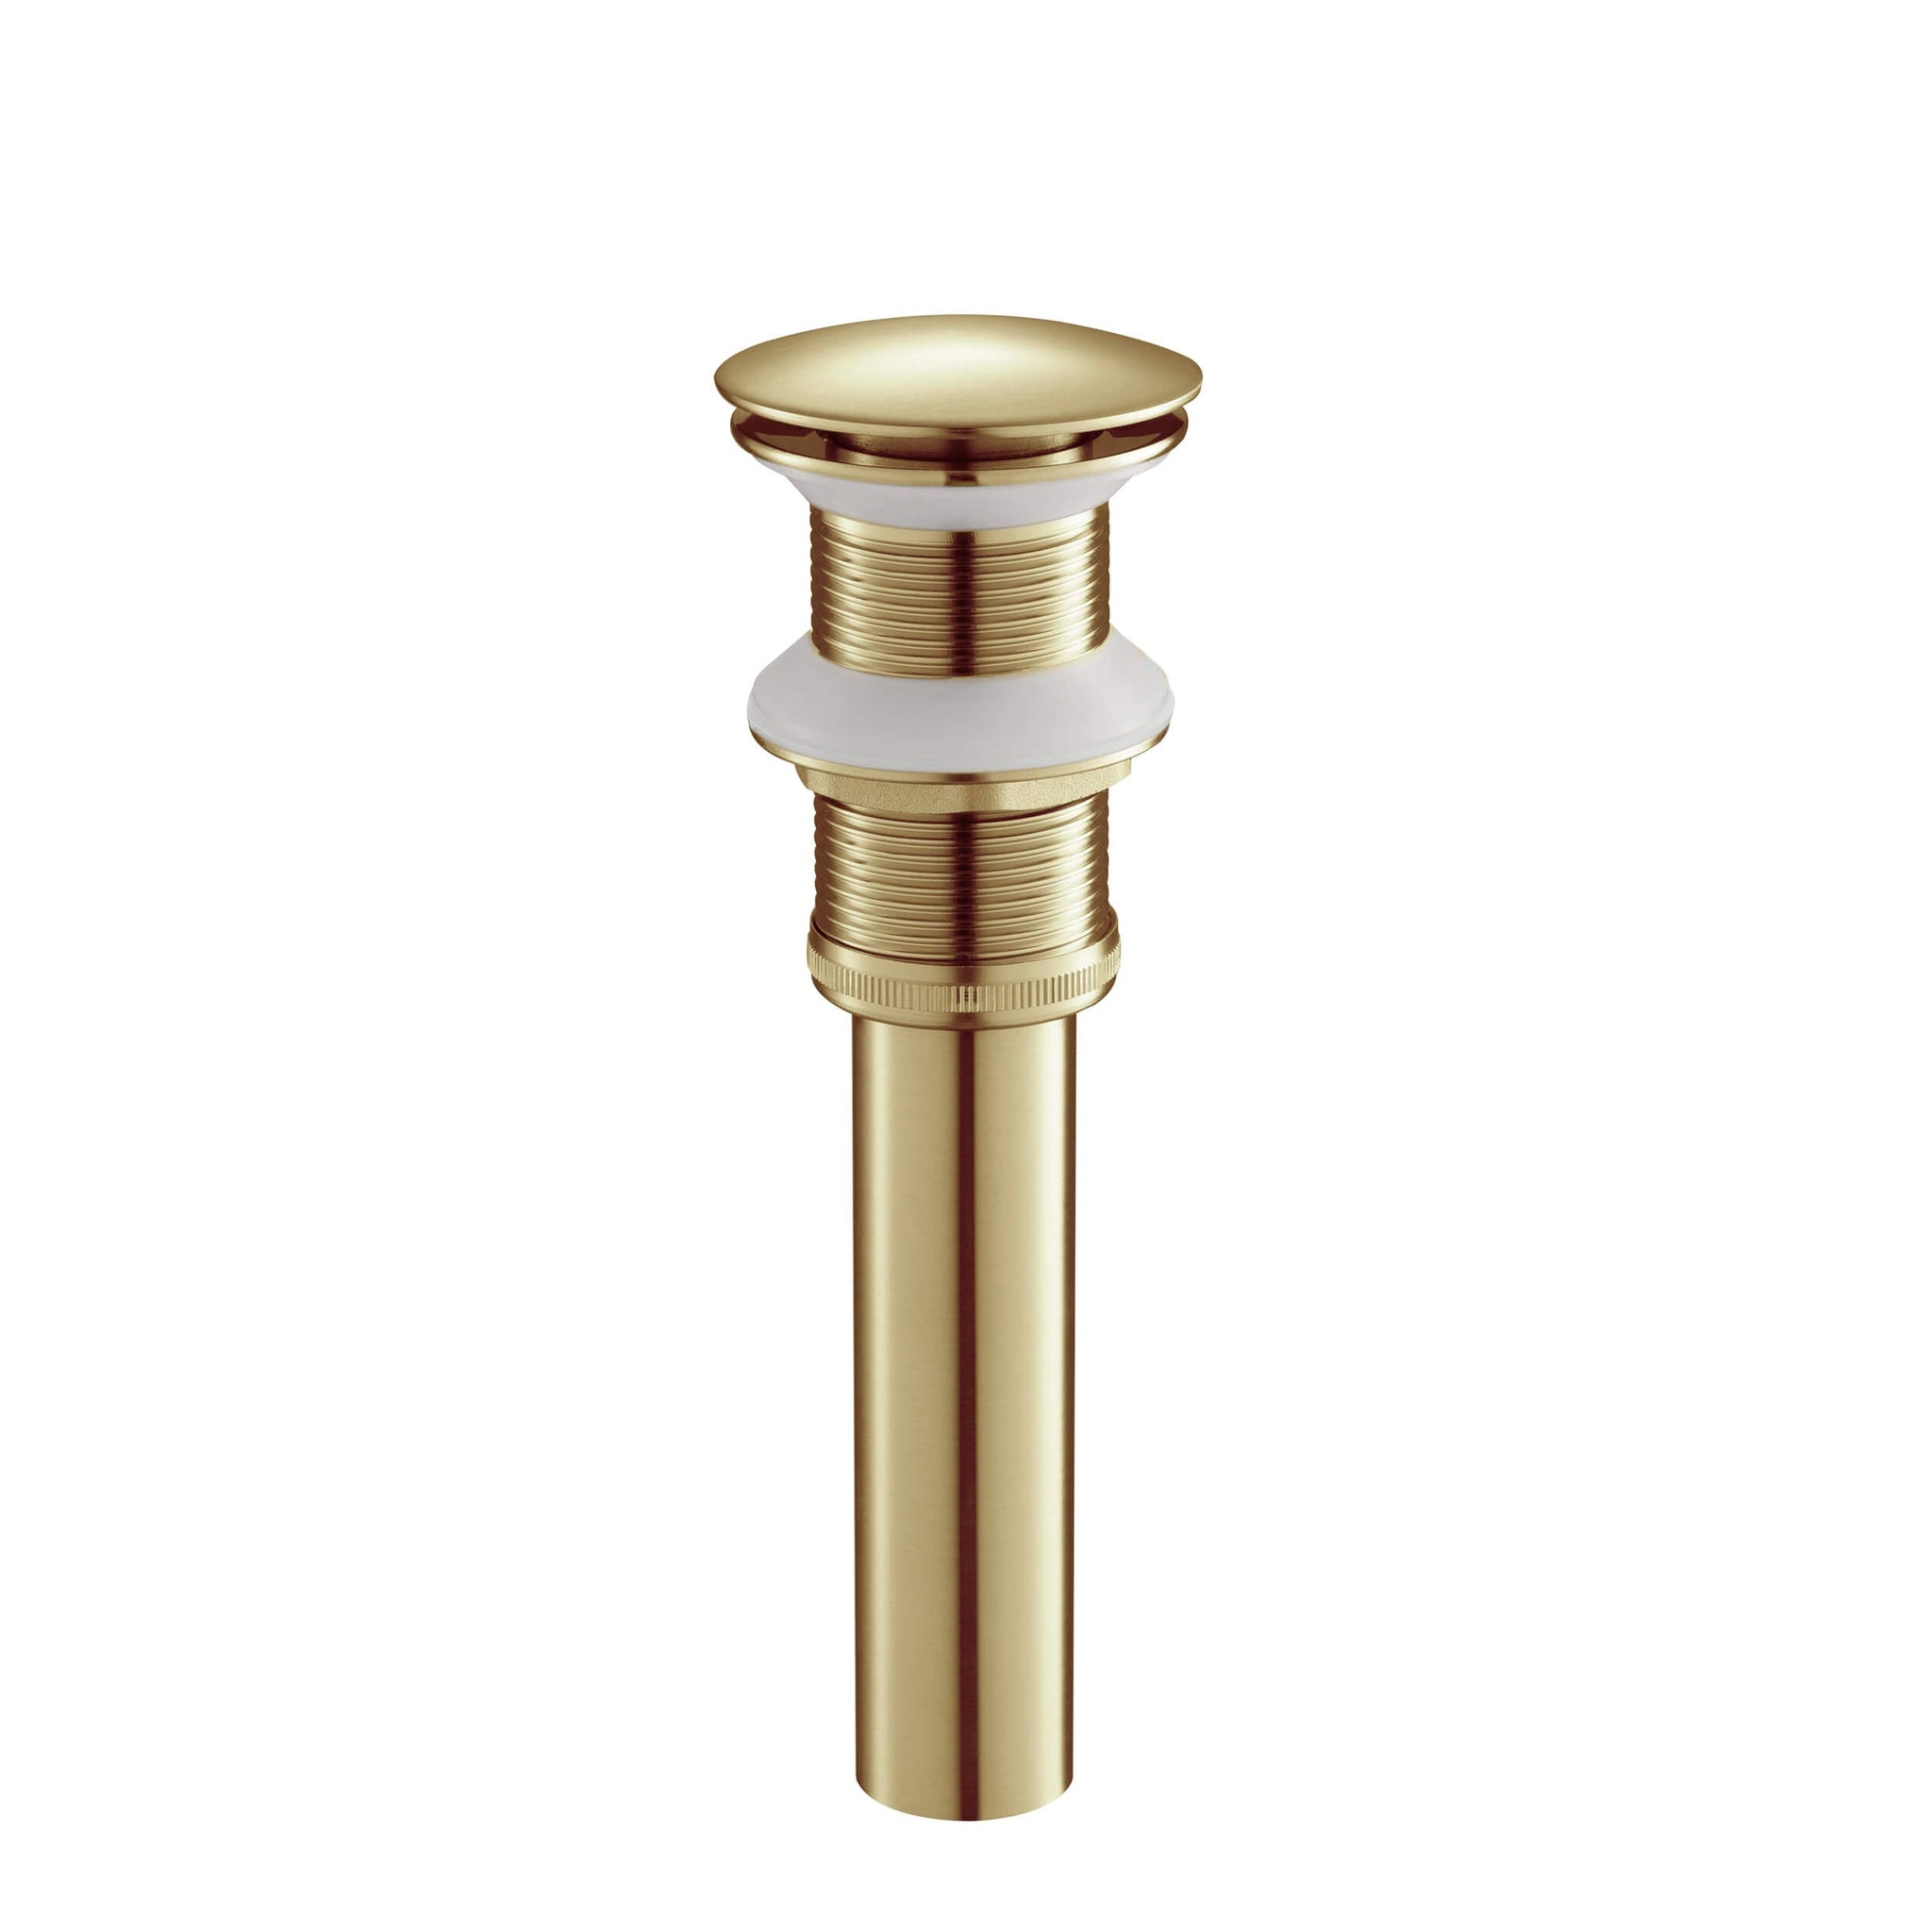 KIBI, KIBI Brass Bathroom Vessel Sink Pop-Up Drain Stopper Full Cover Without Overflow in Brushed Gold Finish